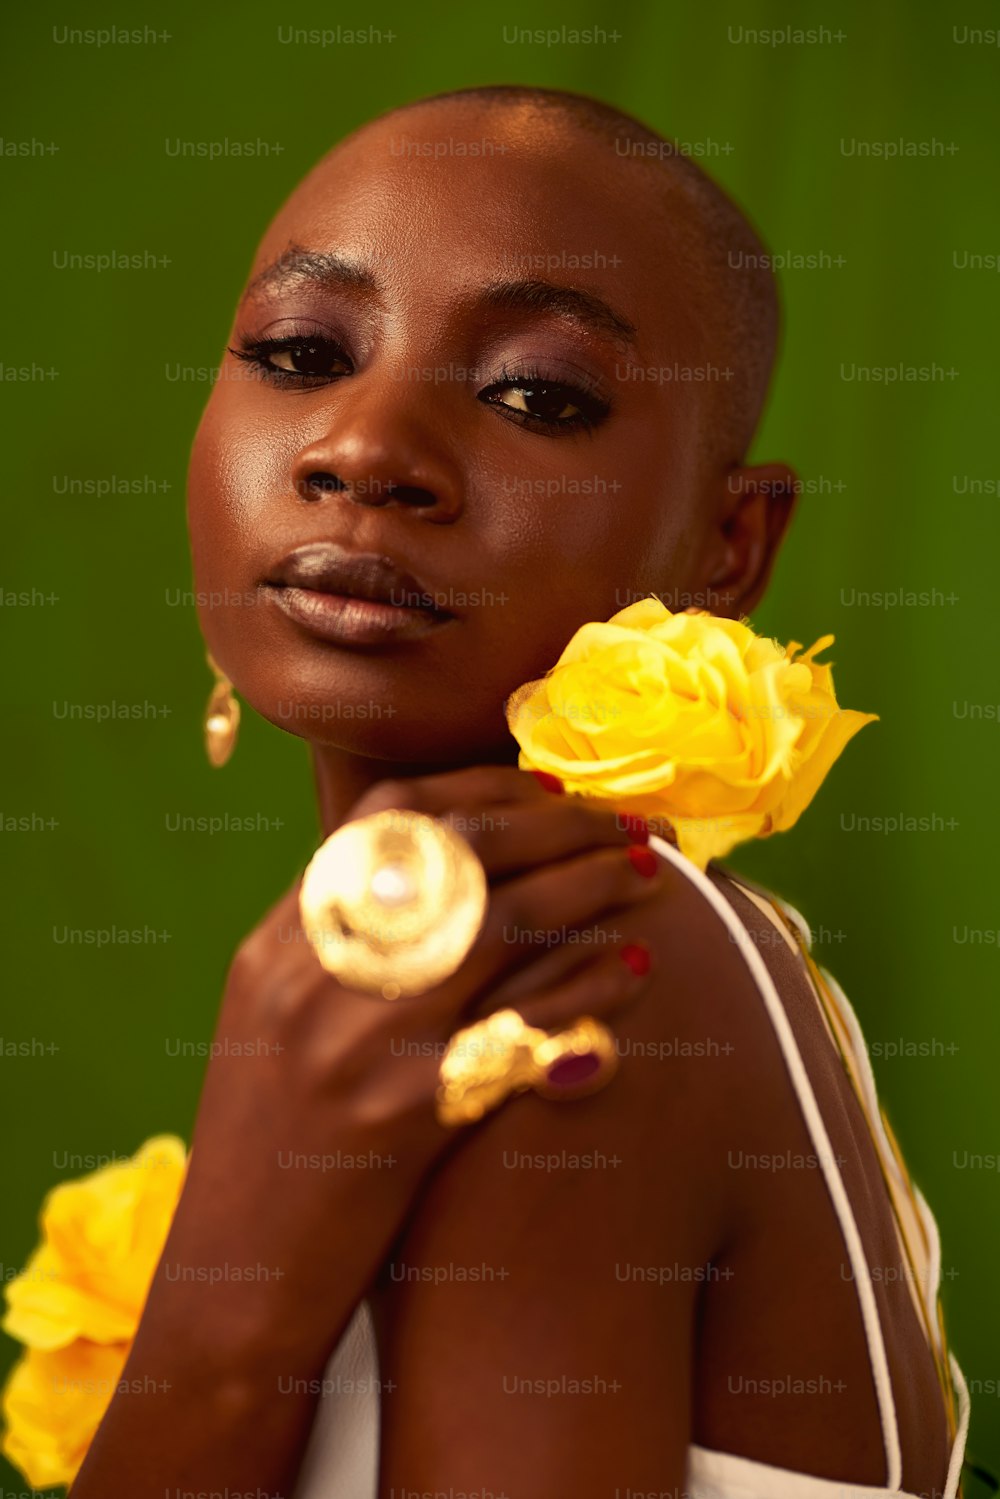 Una donna con una rosa gialla in mano